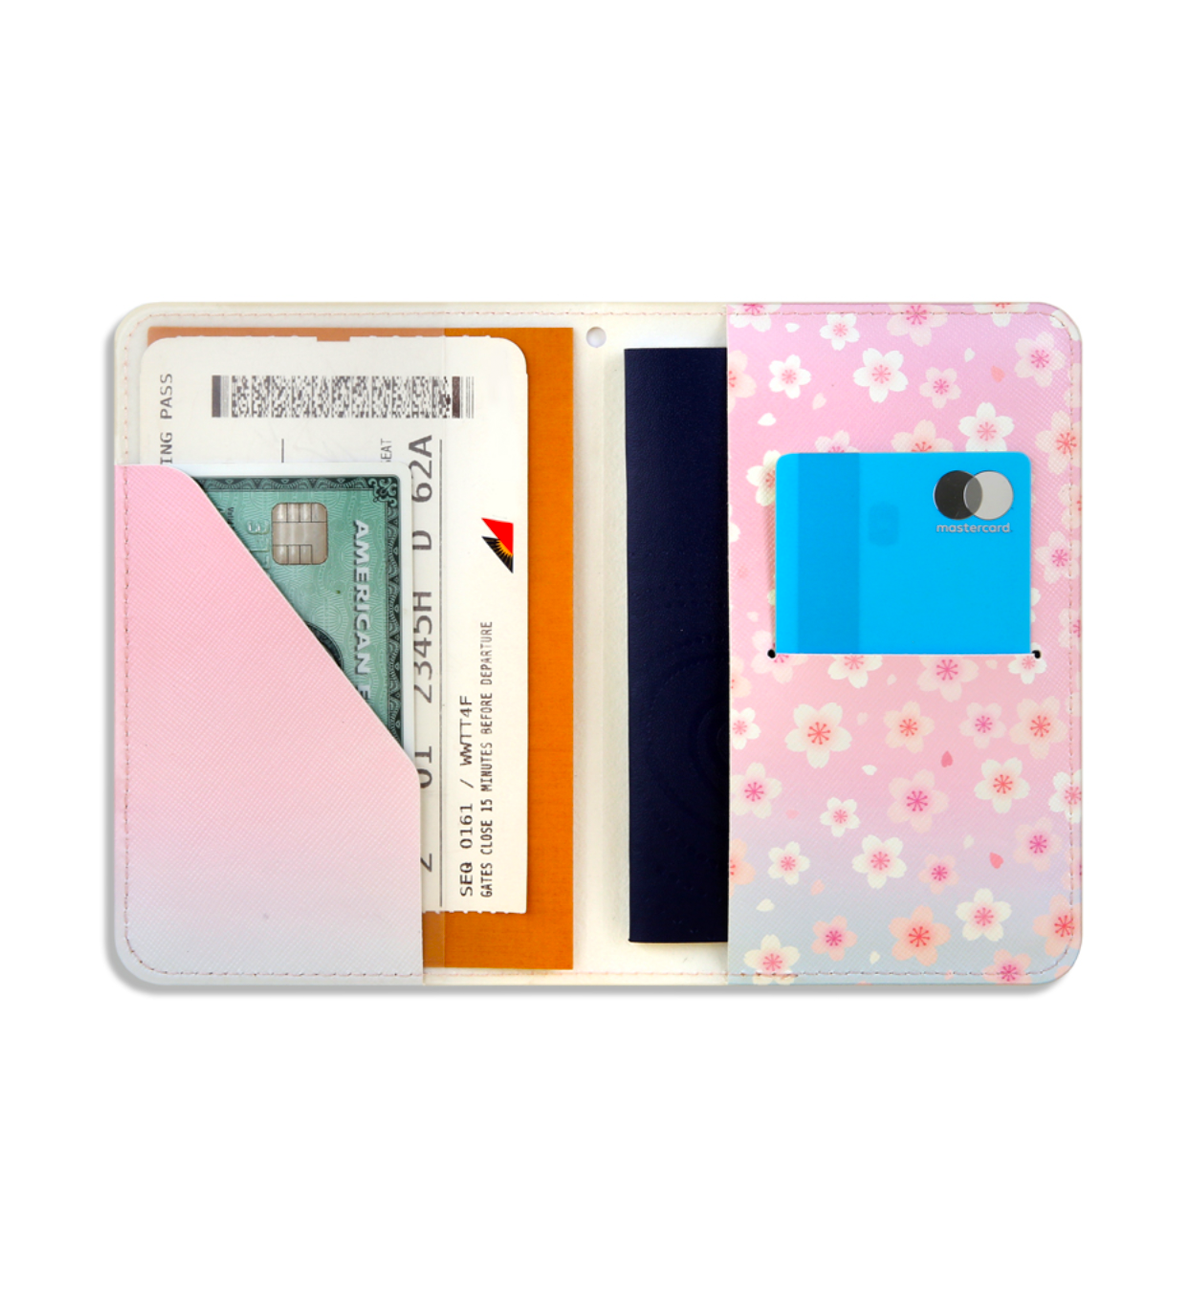 BT21 Cherry Blossom Passport Cover [Shooky]